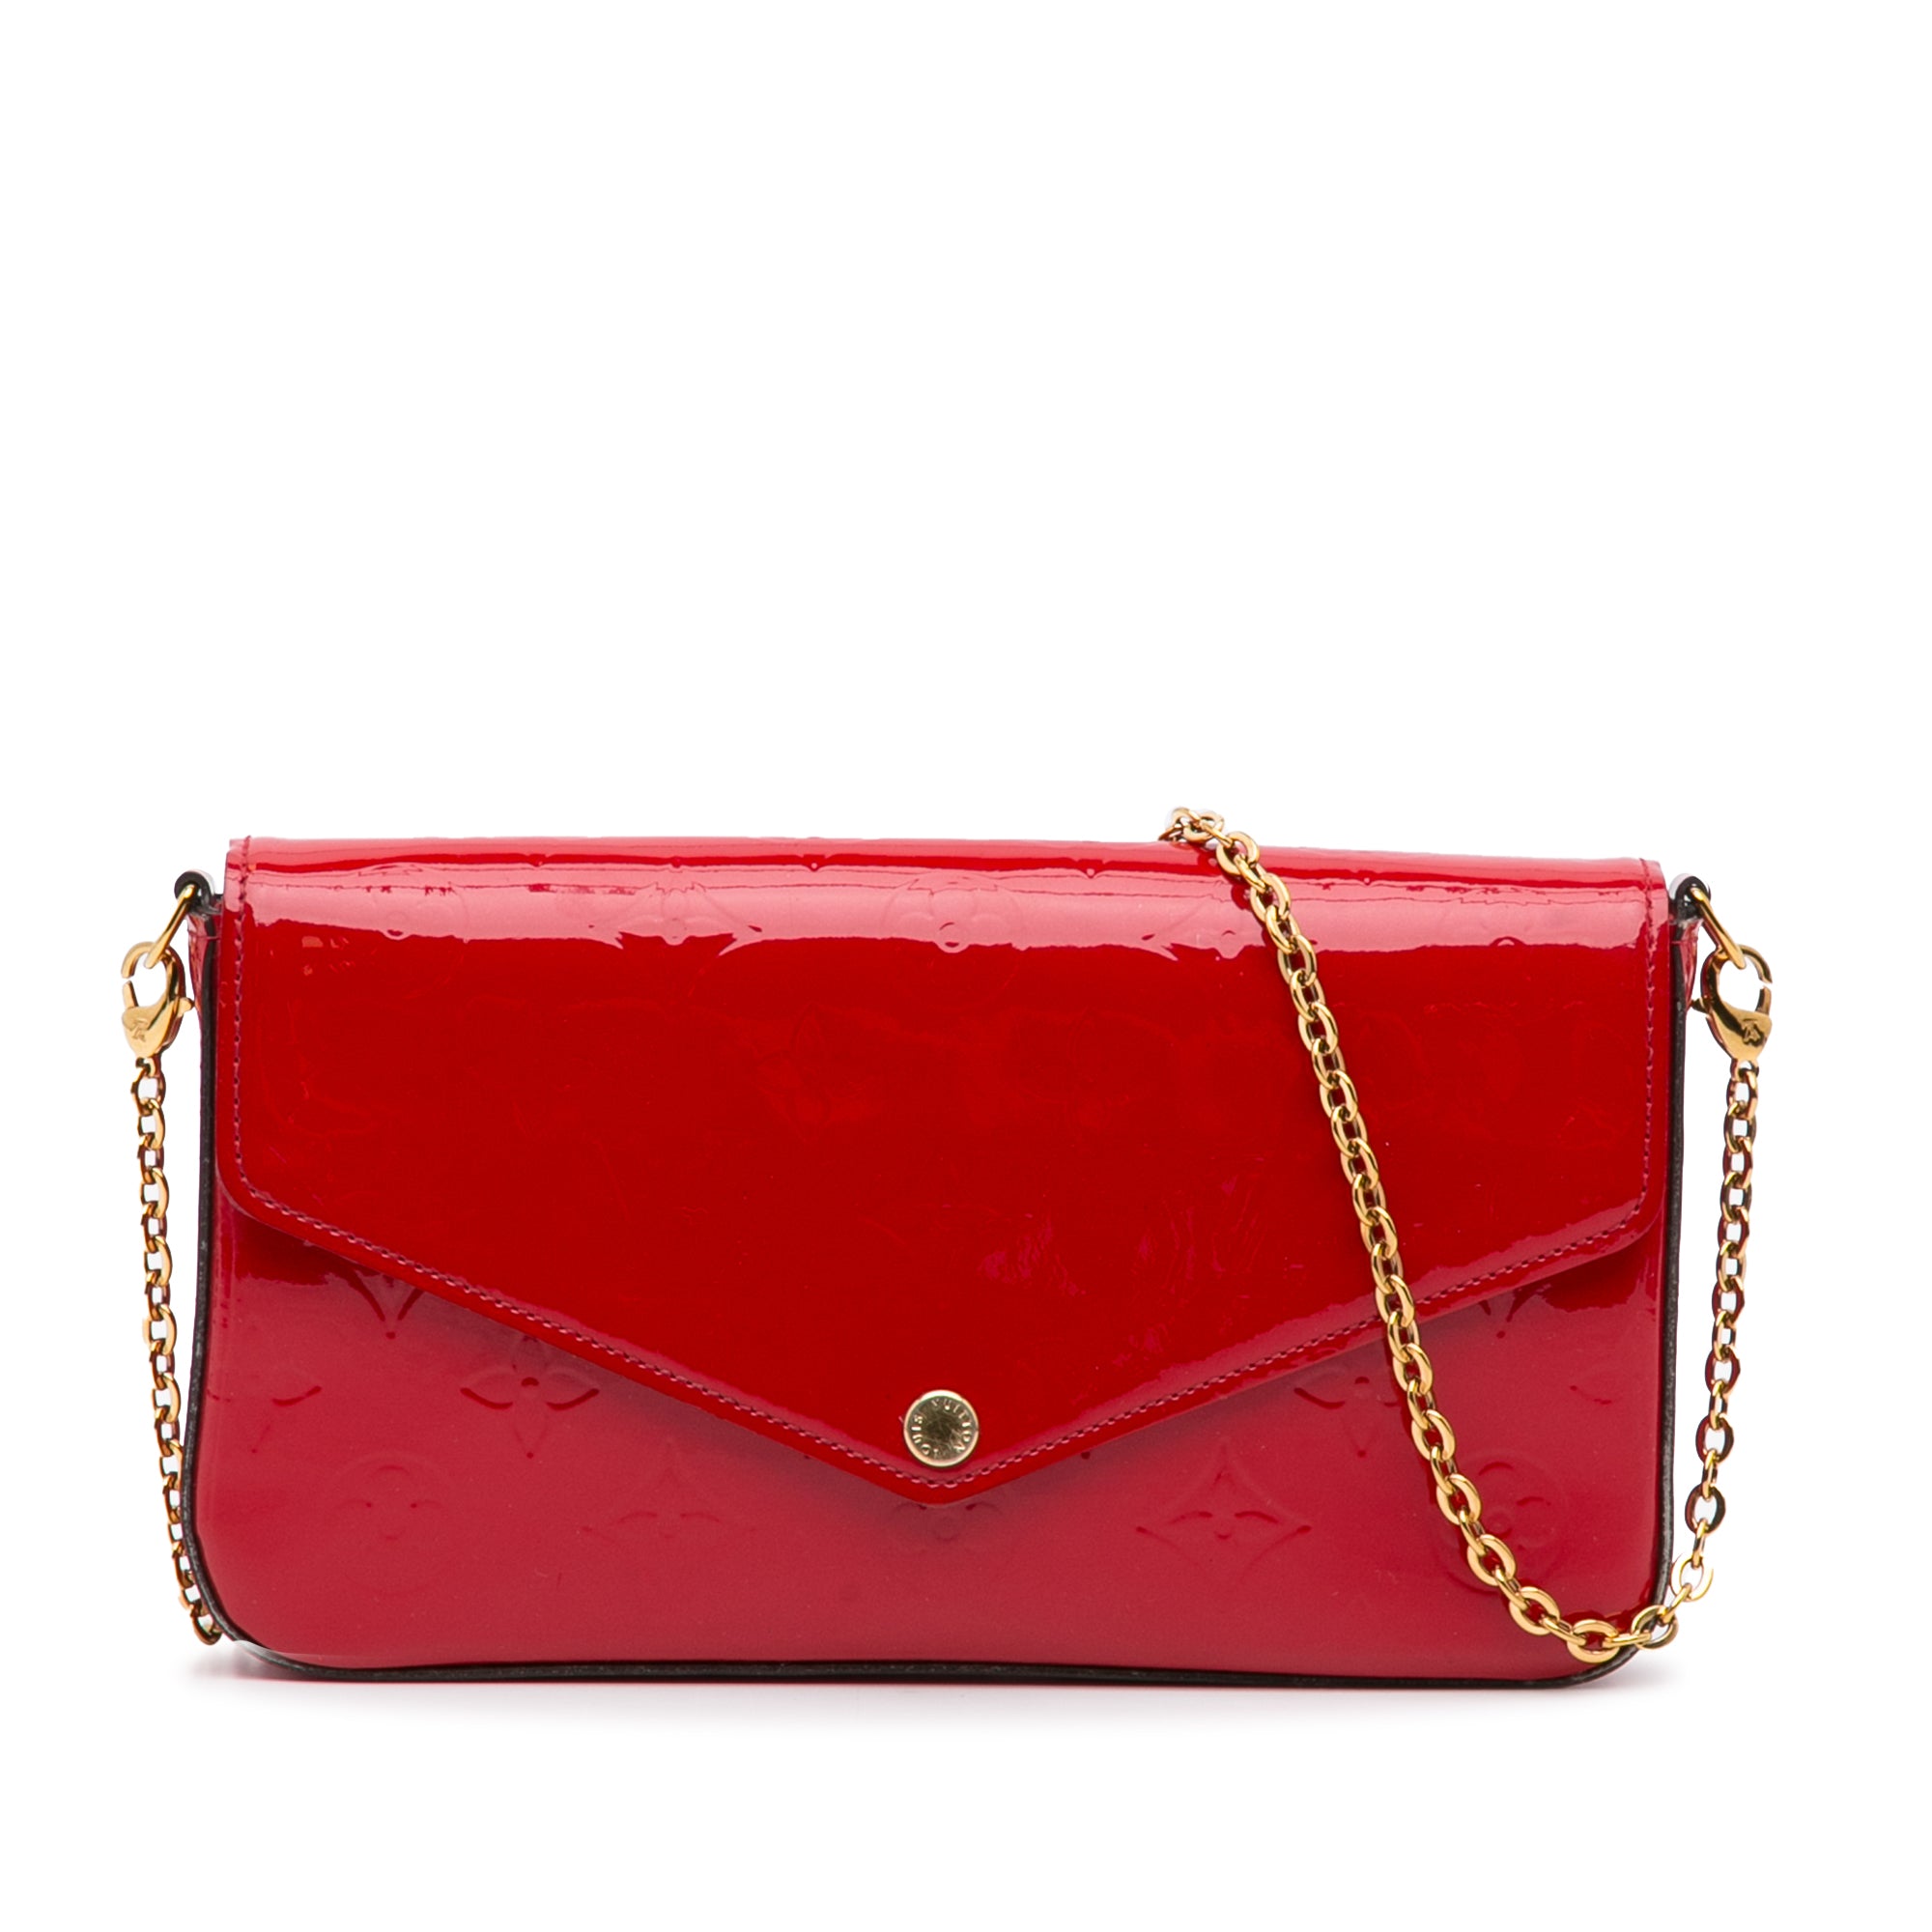 Louis Vuitton Pochette Felicie Handbag Review 